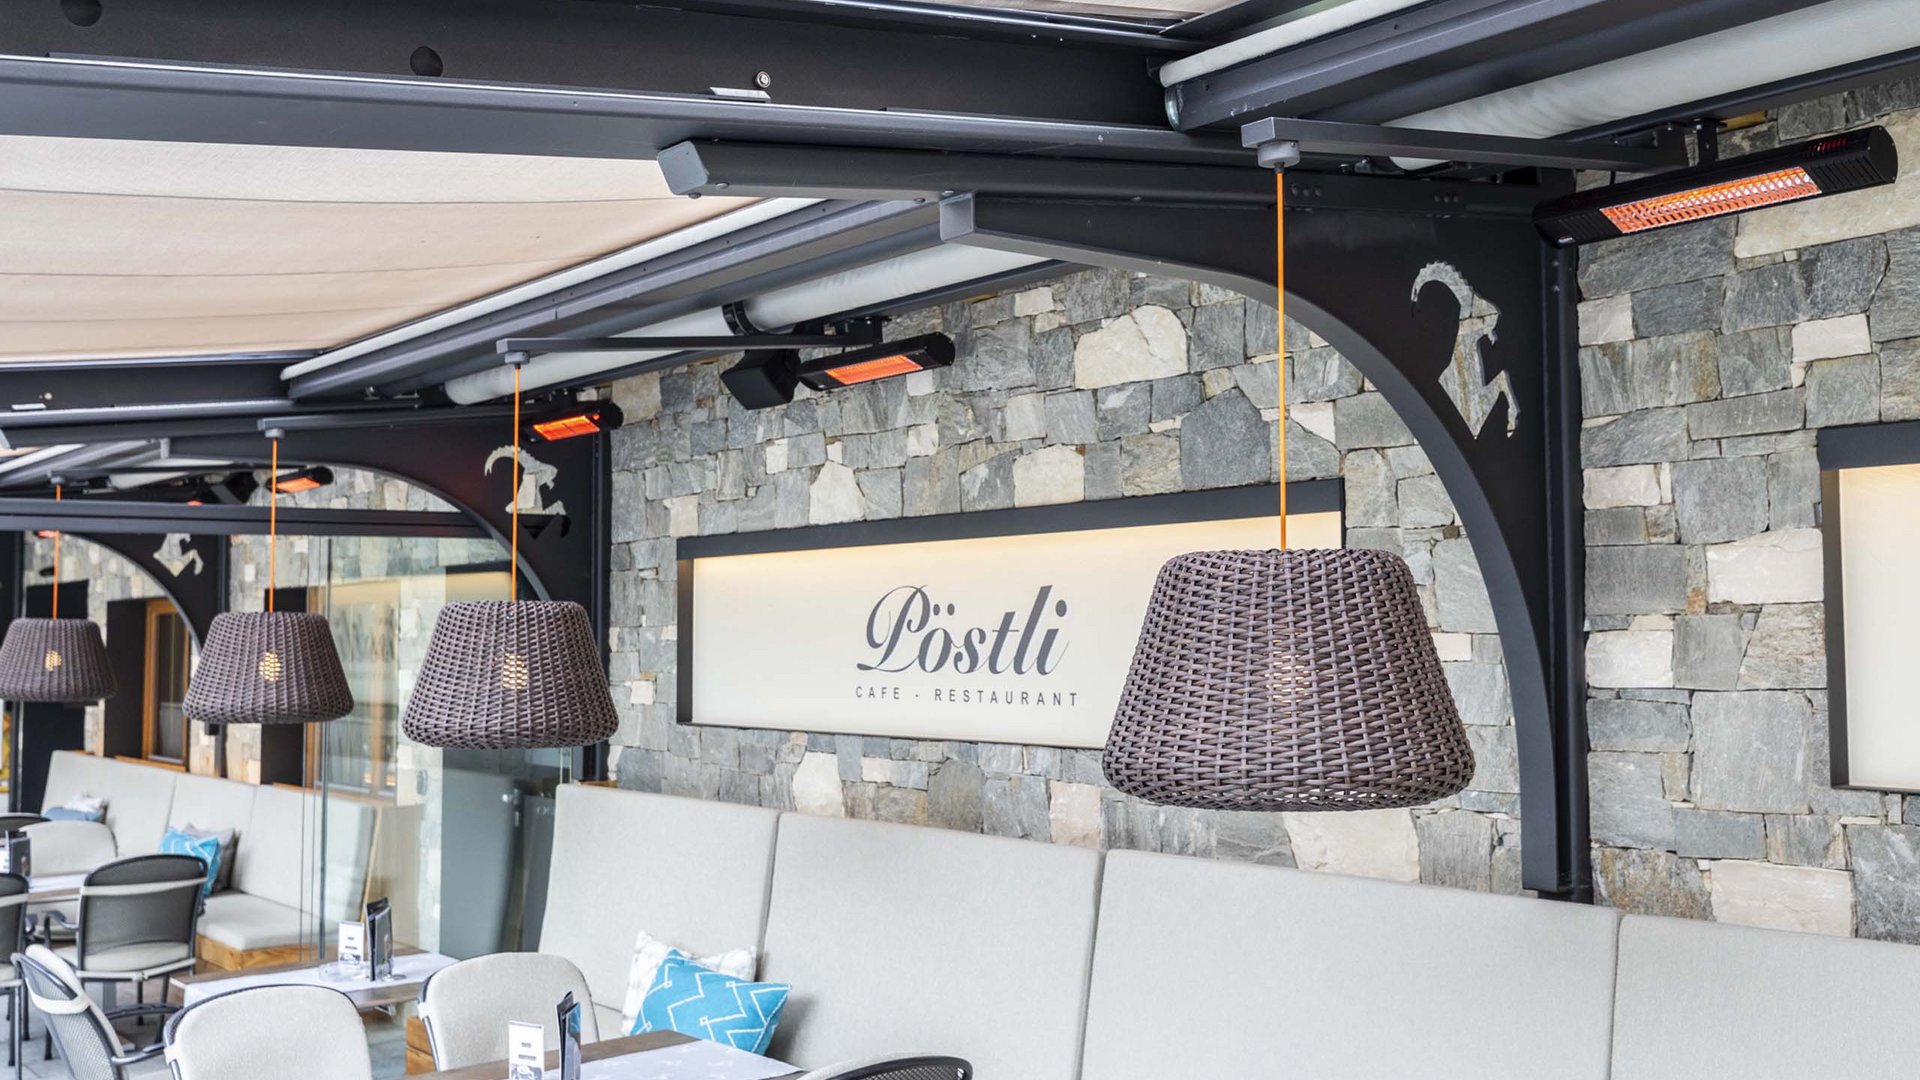 Pöstli Restaurant near Samnaun/Ischgl ski area